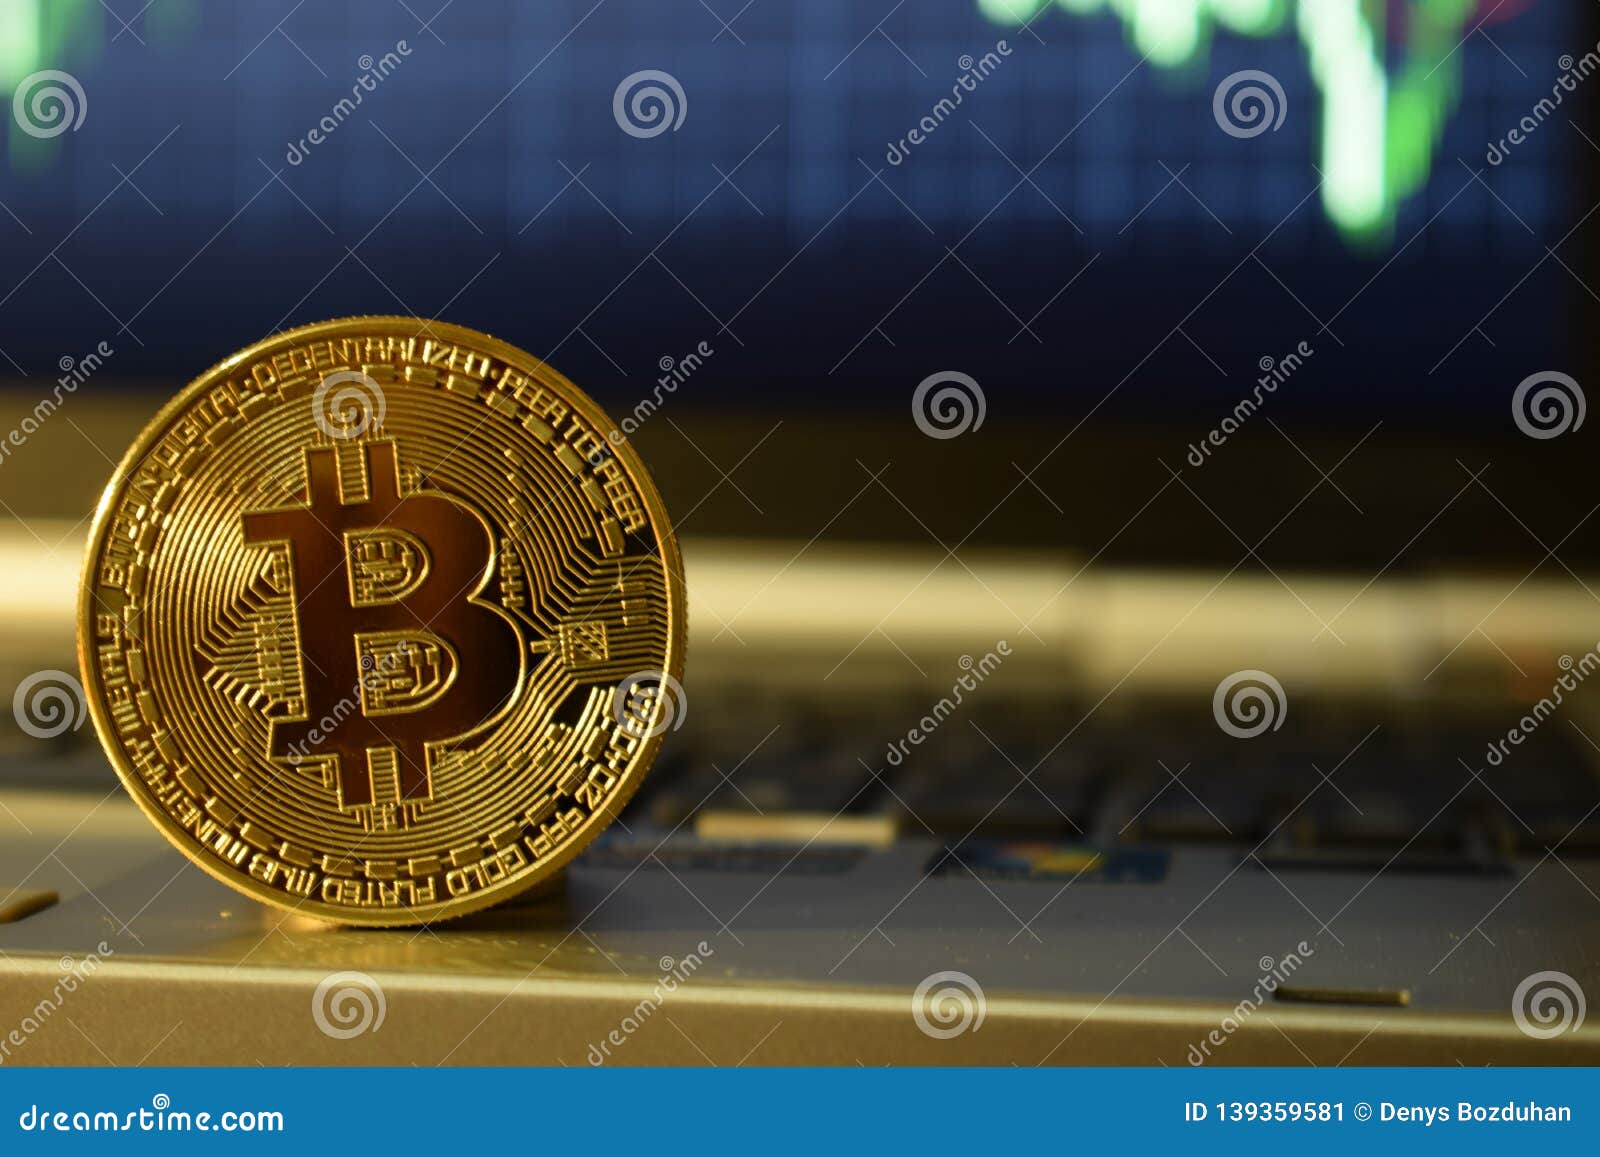 exchange rate bitocin bitcoin gold